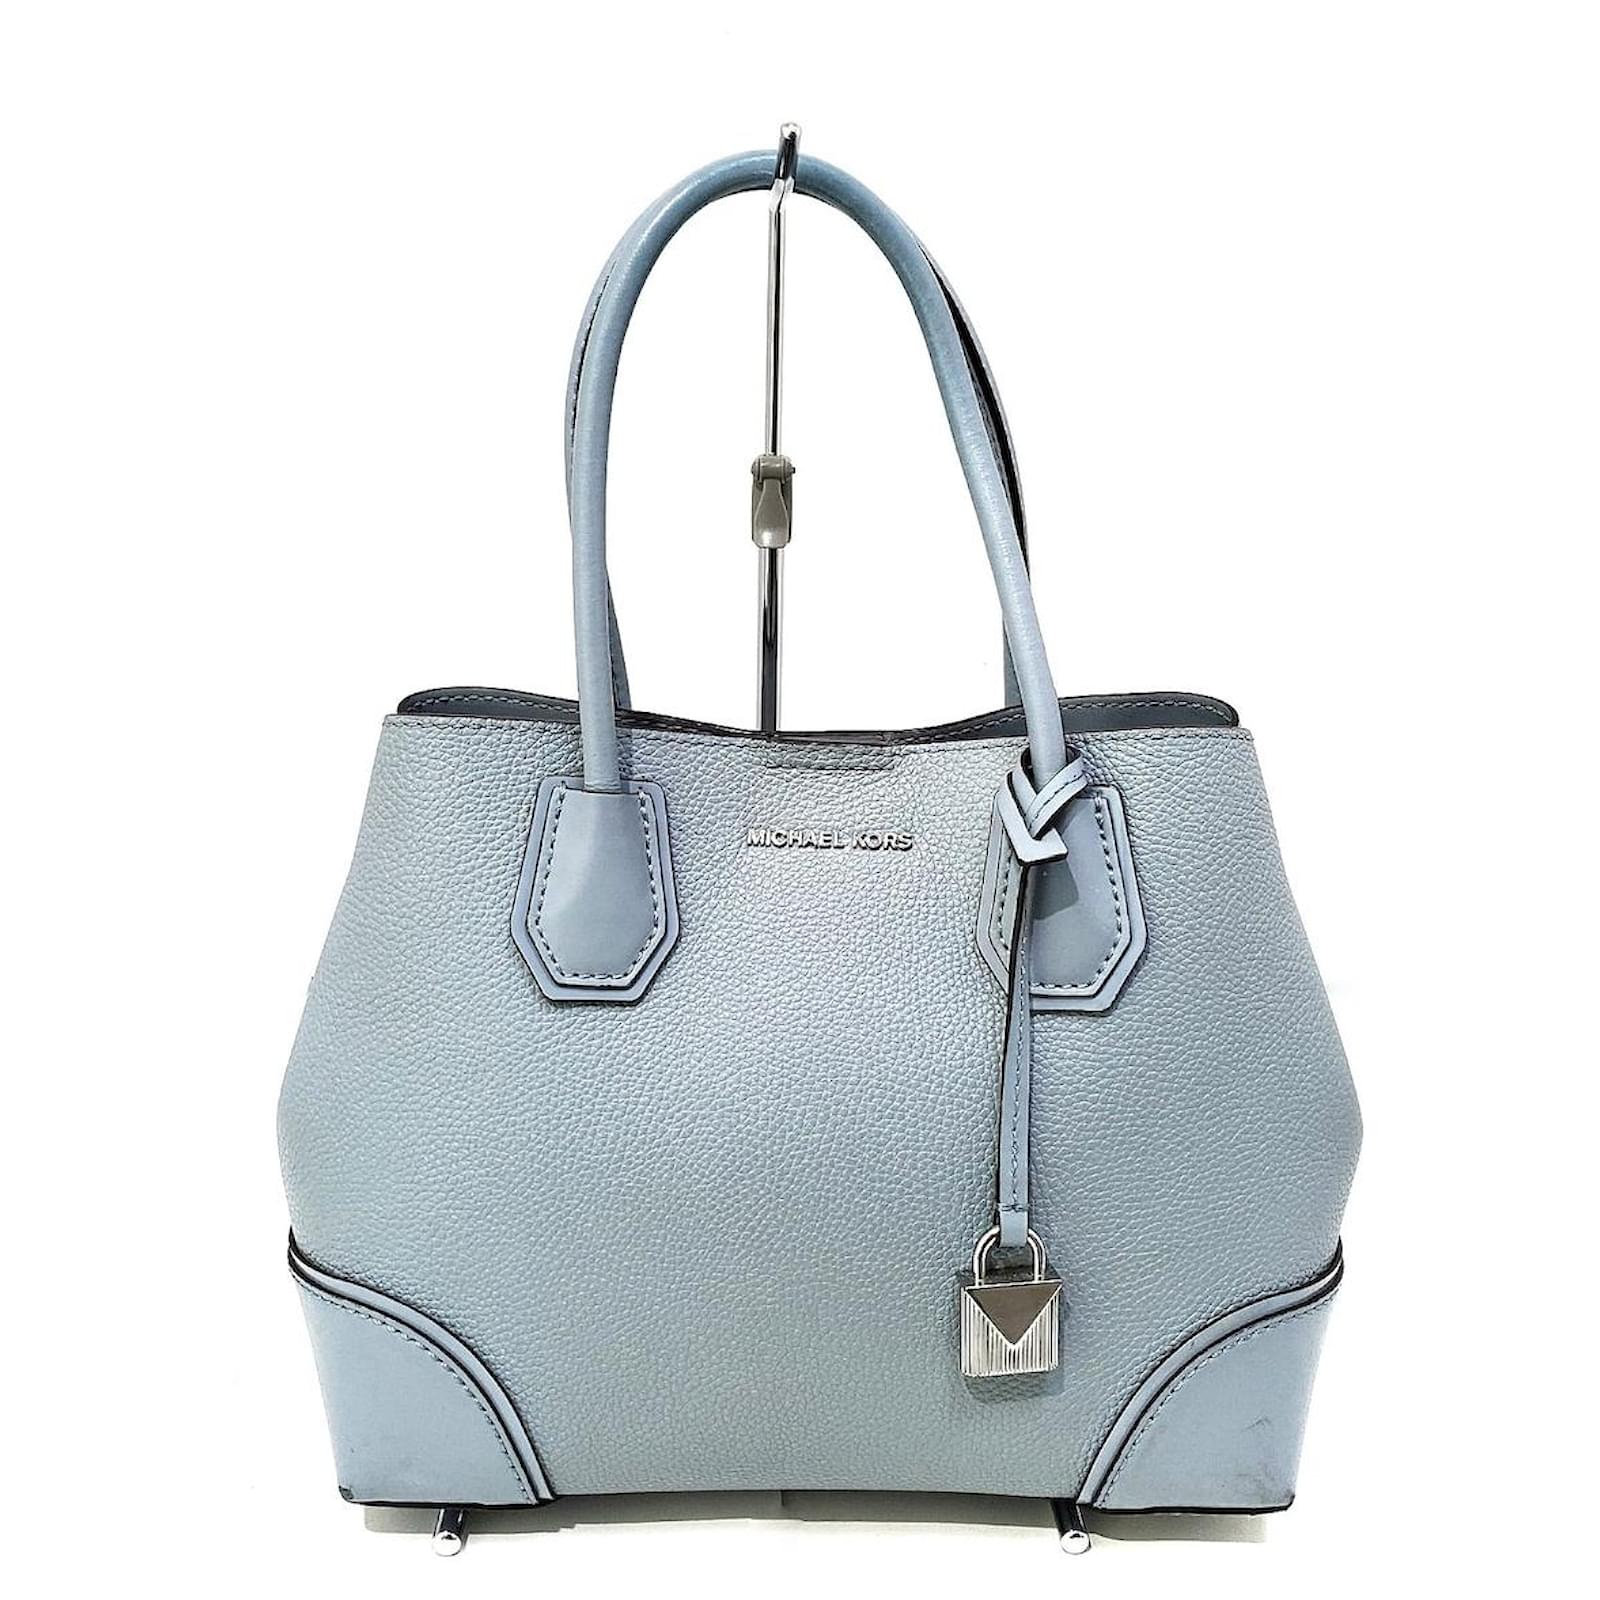 Genuine Light Blue Michael Kors Handbag | eBay